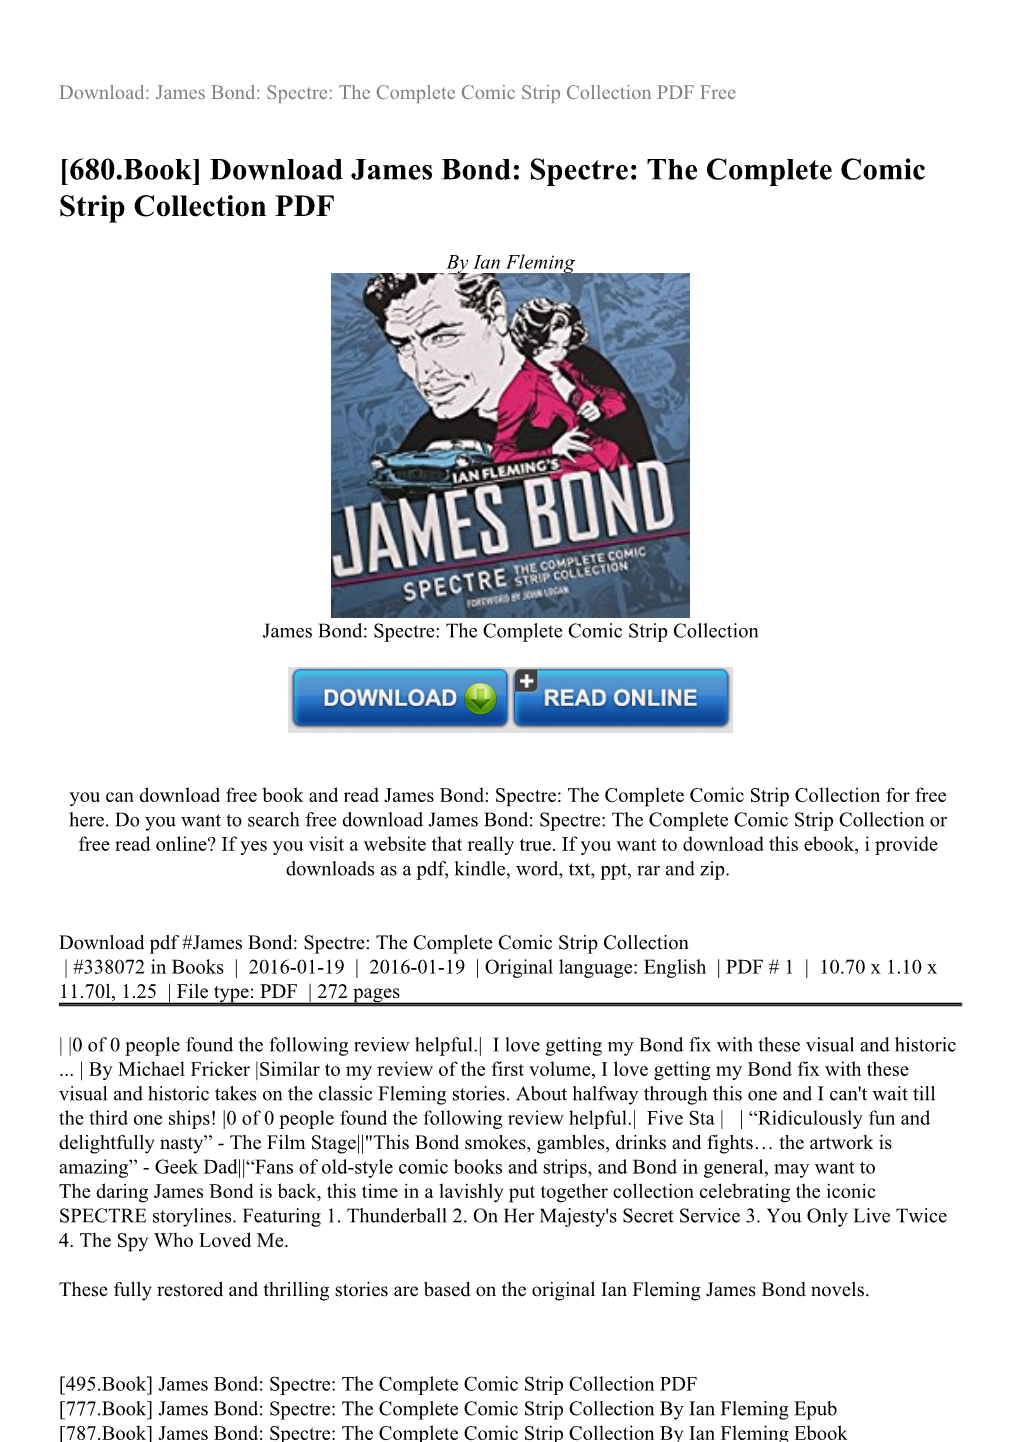 Download James Bond: Spectre: the Complete Comic Strip Collection PDF